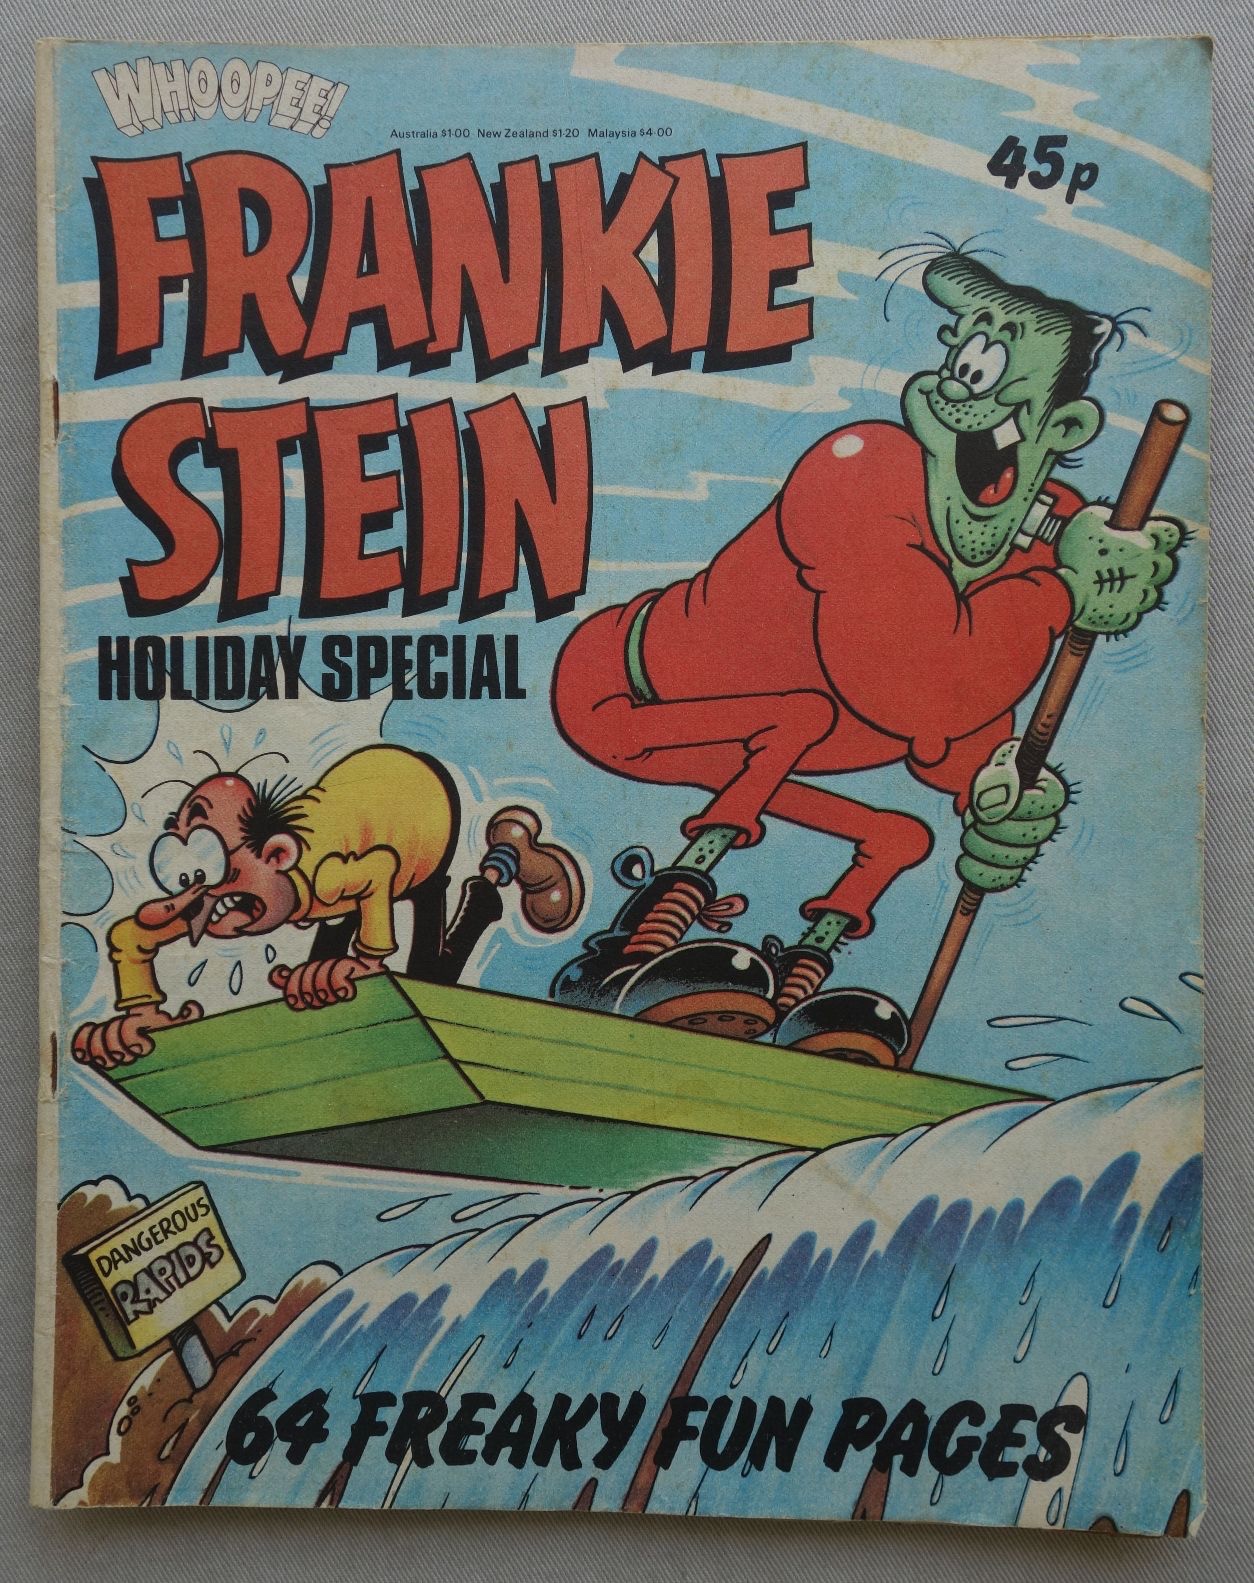 Frankie Stein Holiday Special 1981 